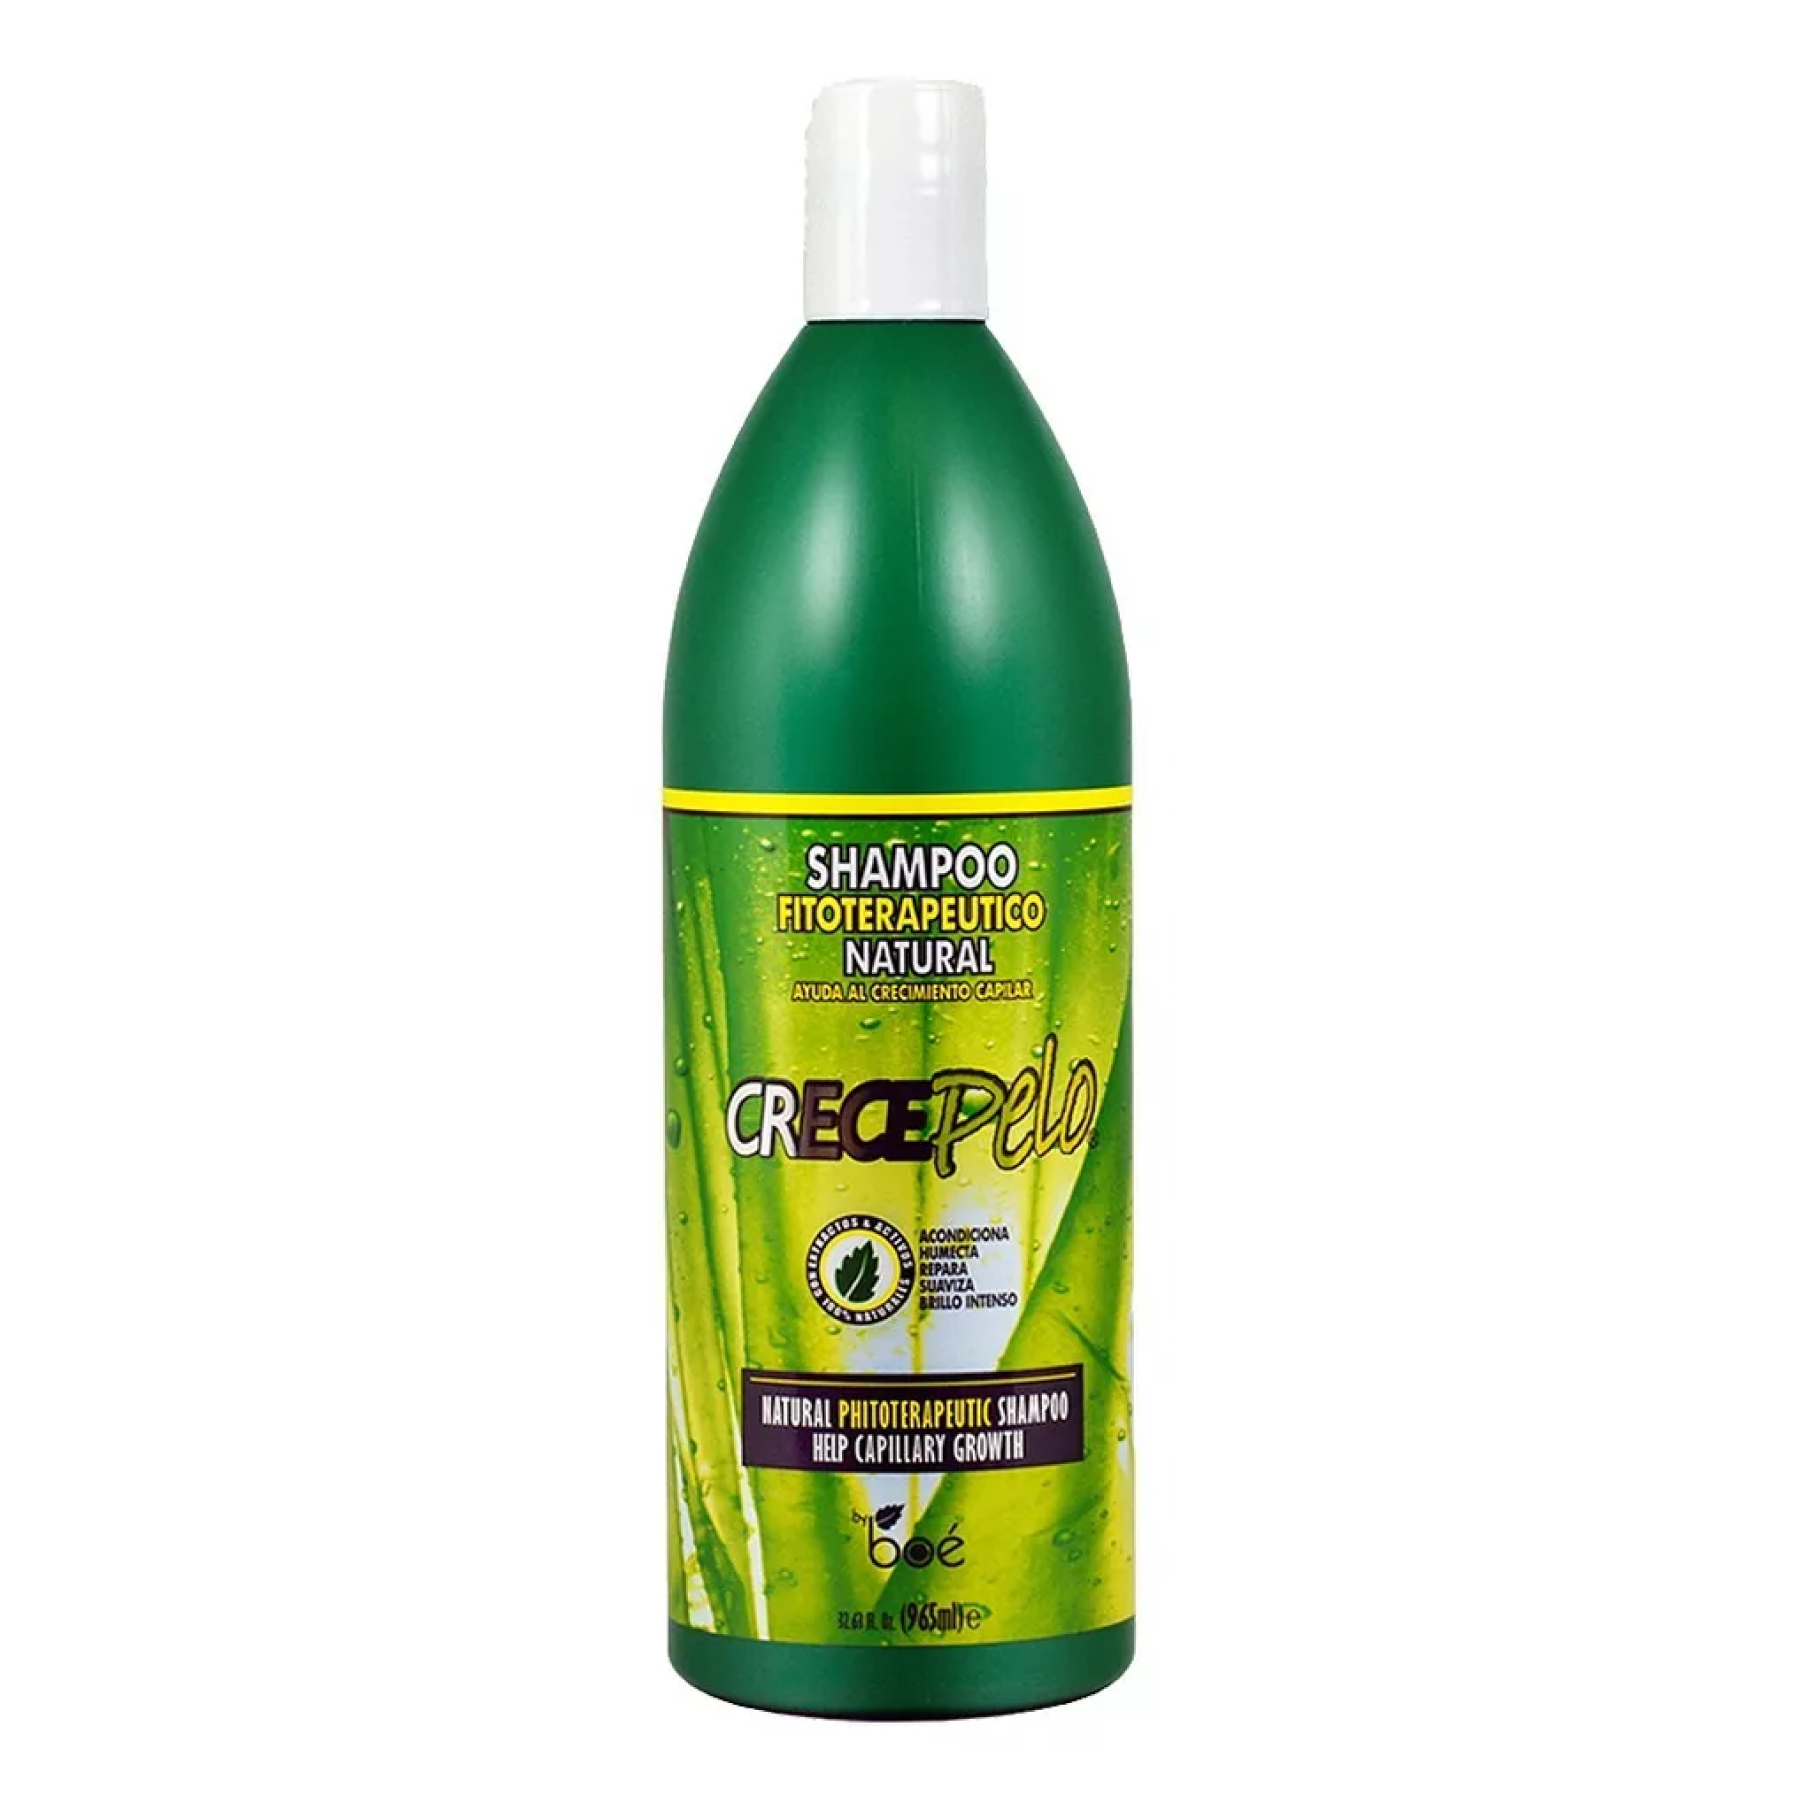 Boe Crecepelo Hair Growth Shampoo 32.63 fl oz